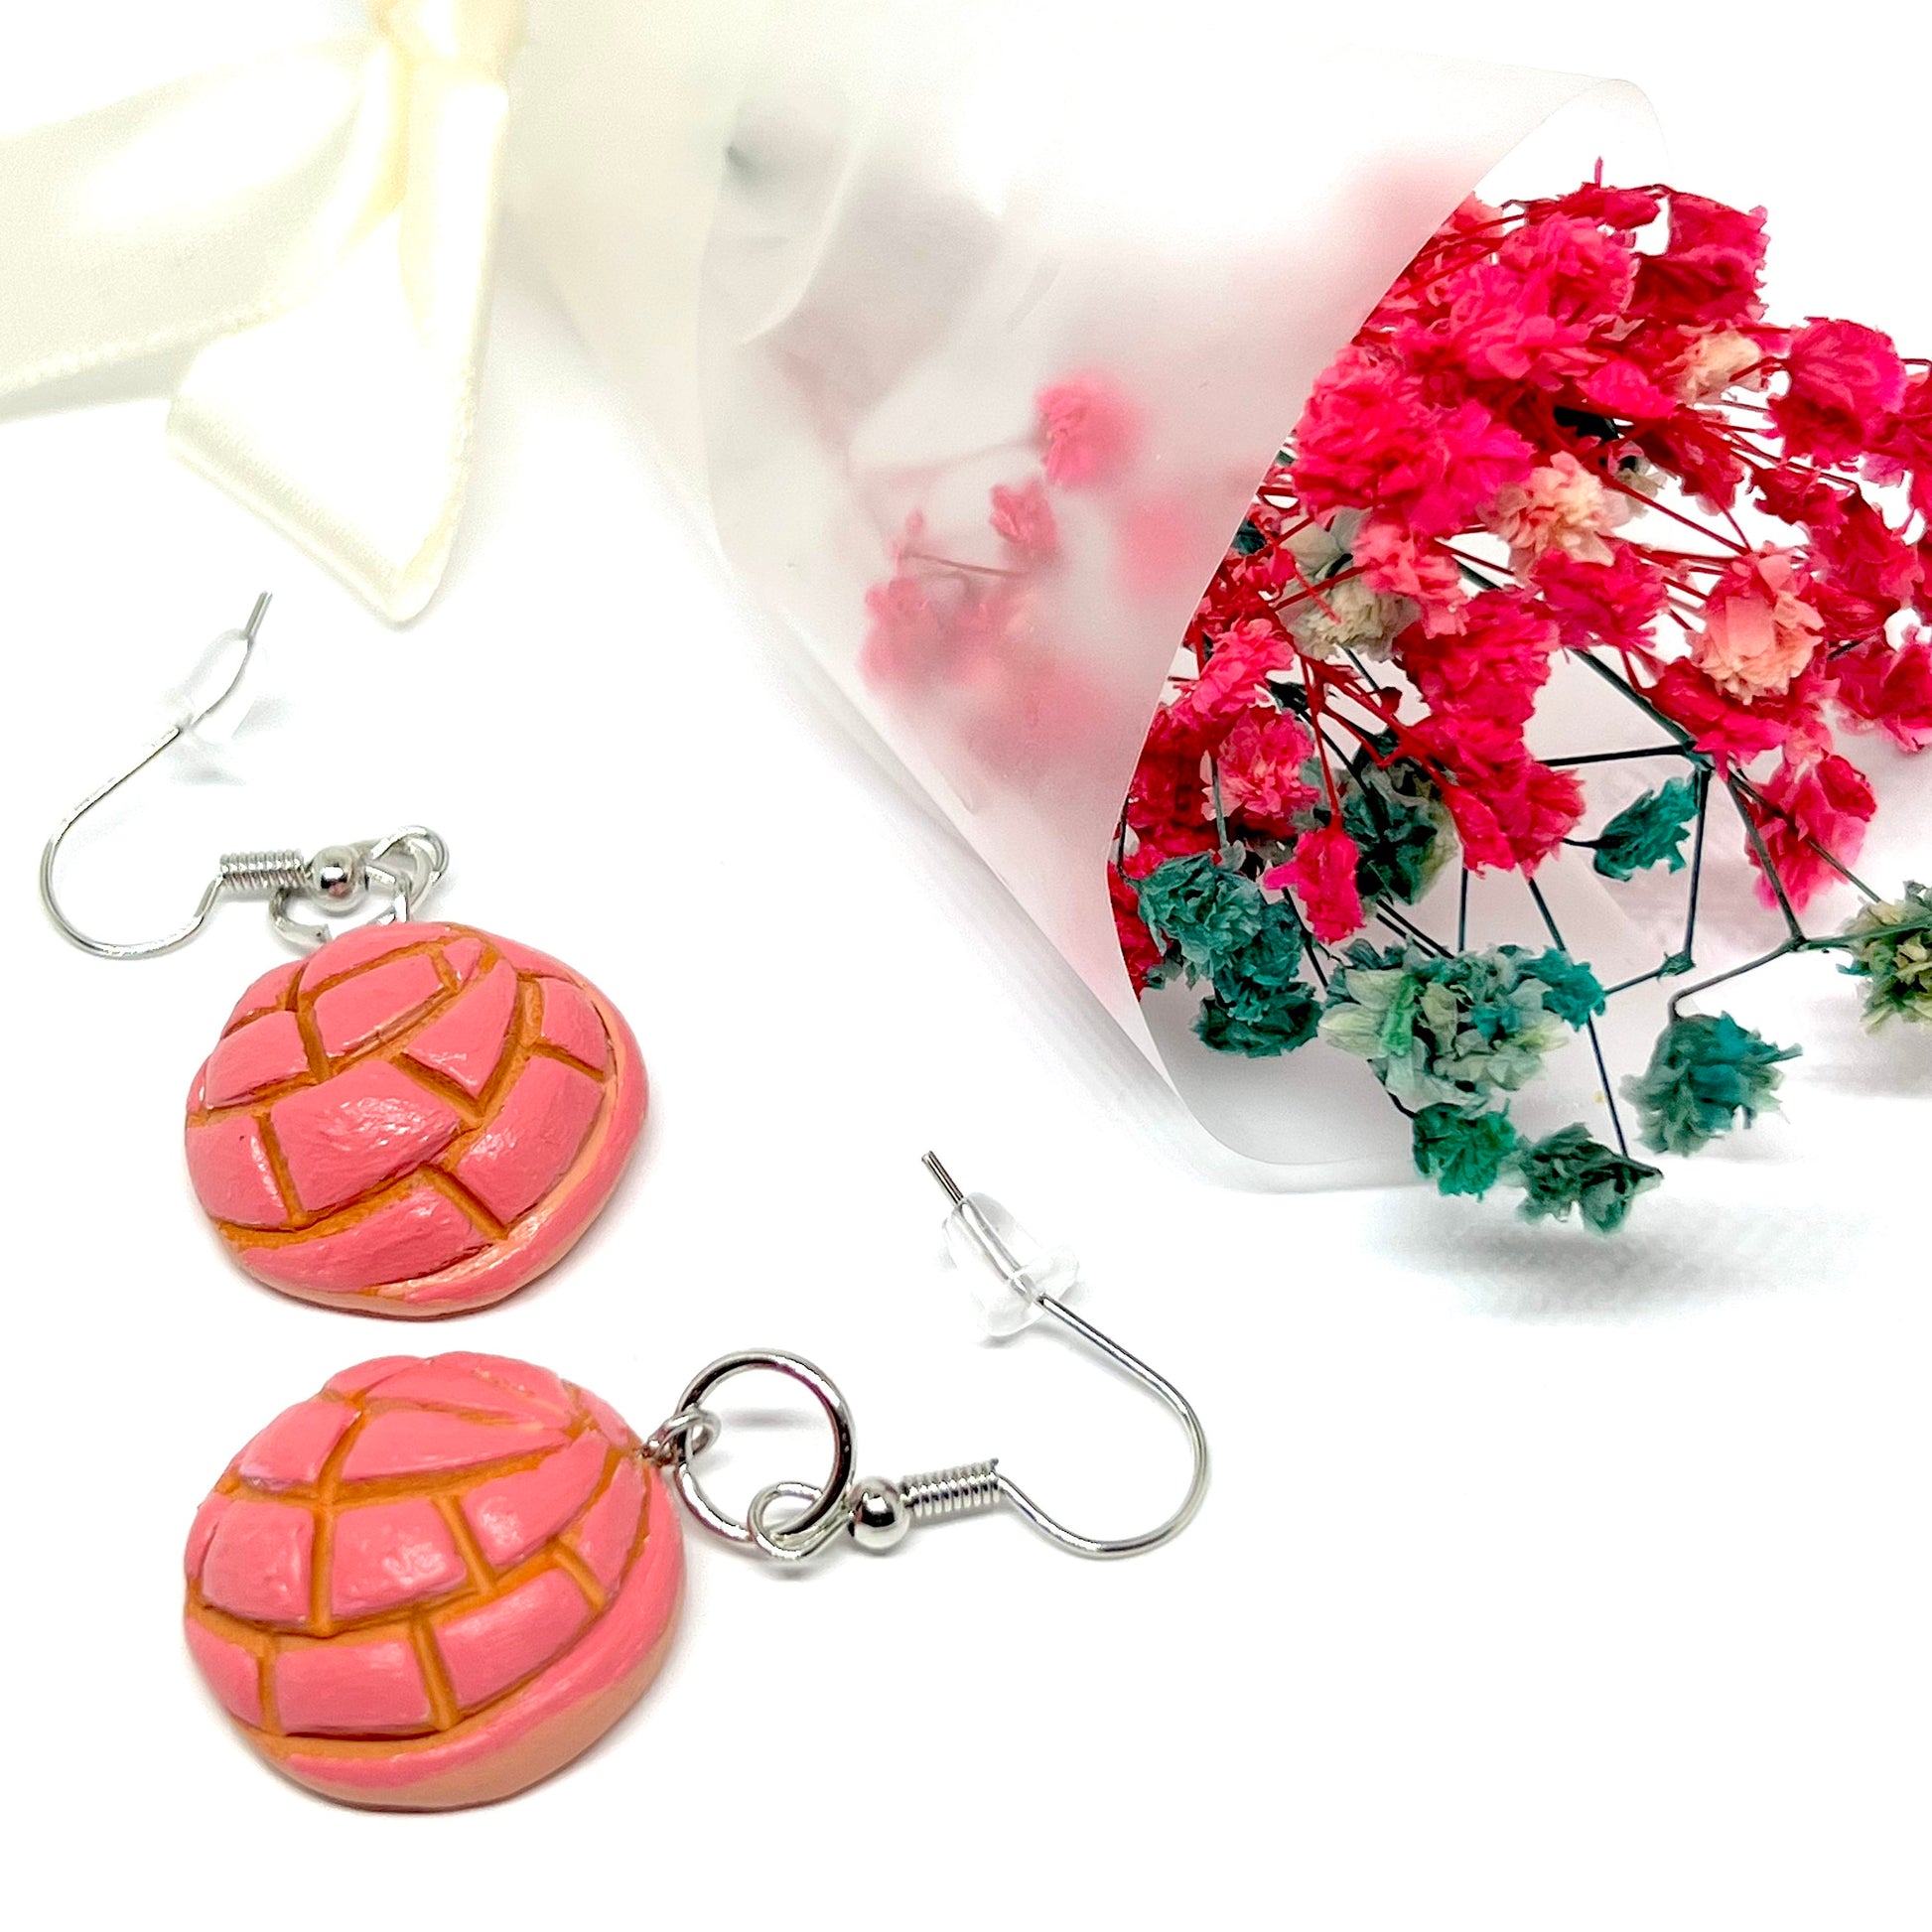 Strawberry Pink Concha Clay Earrings Dangle SweetBread Handpainted Food Jewelry Fashion Mexican FolkArt Conchitas Women Girls Gift Birthday